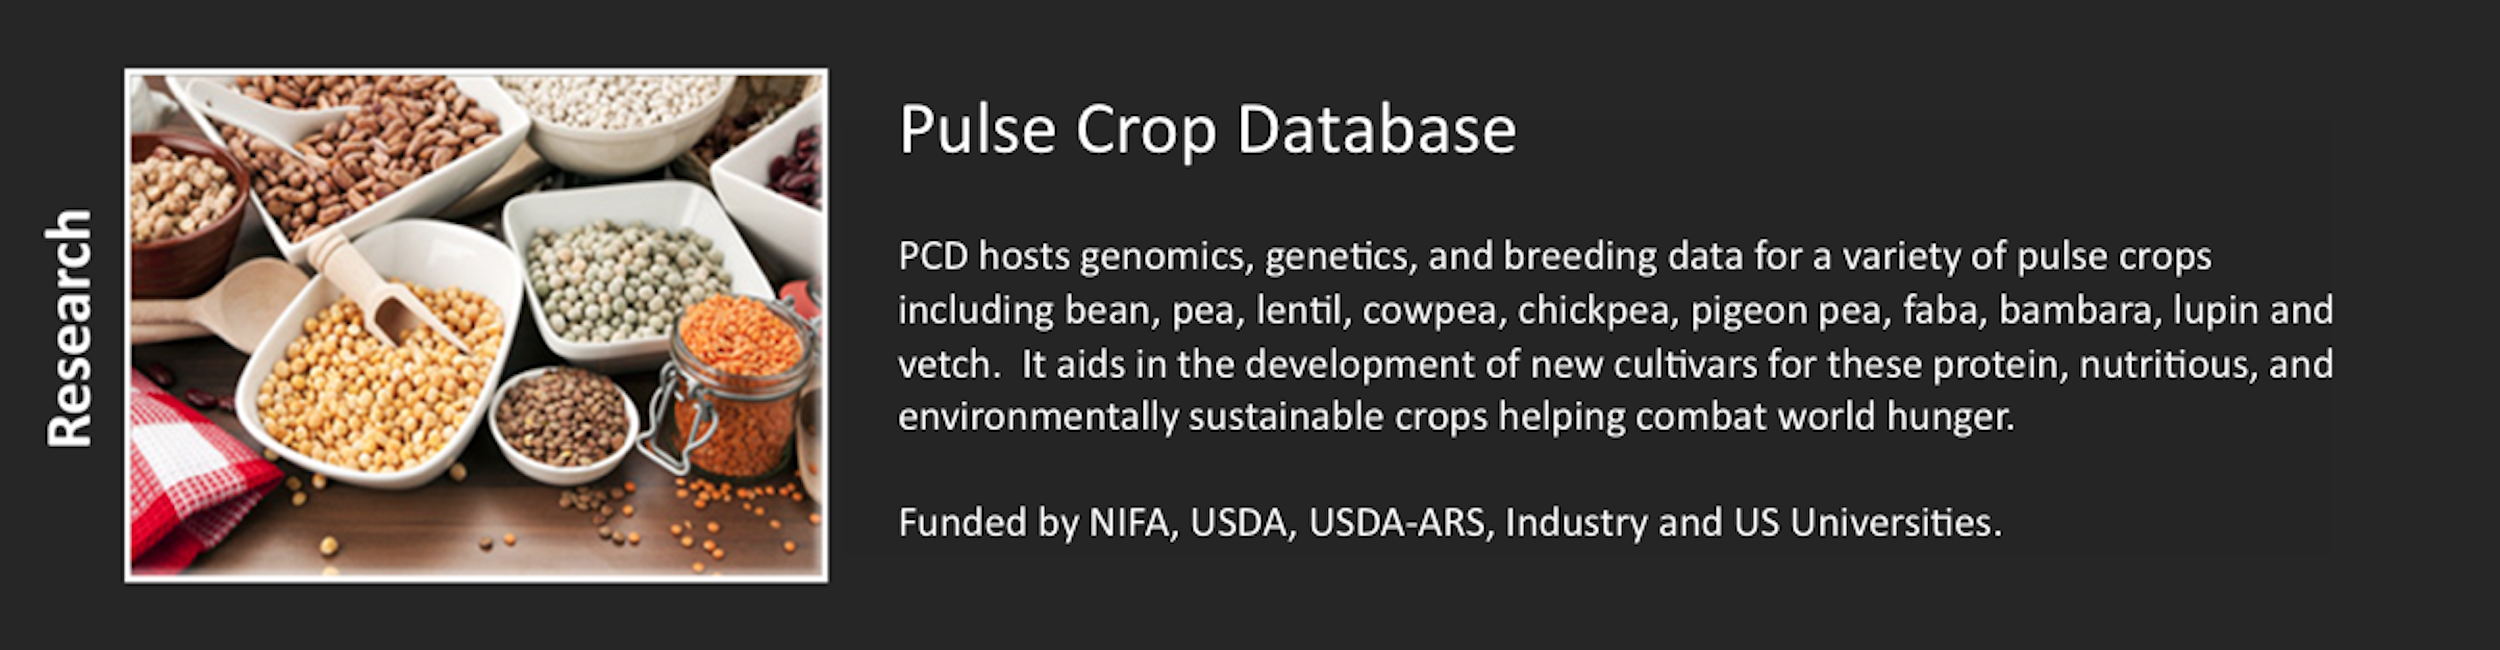 Pulse Crop Database